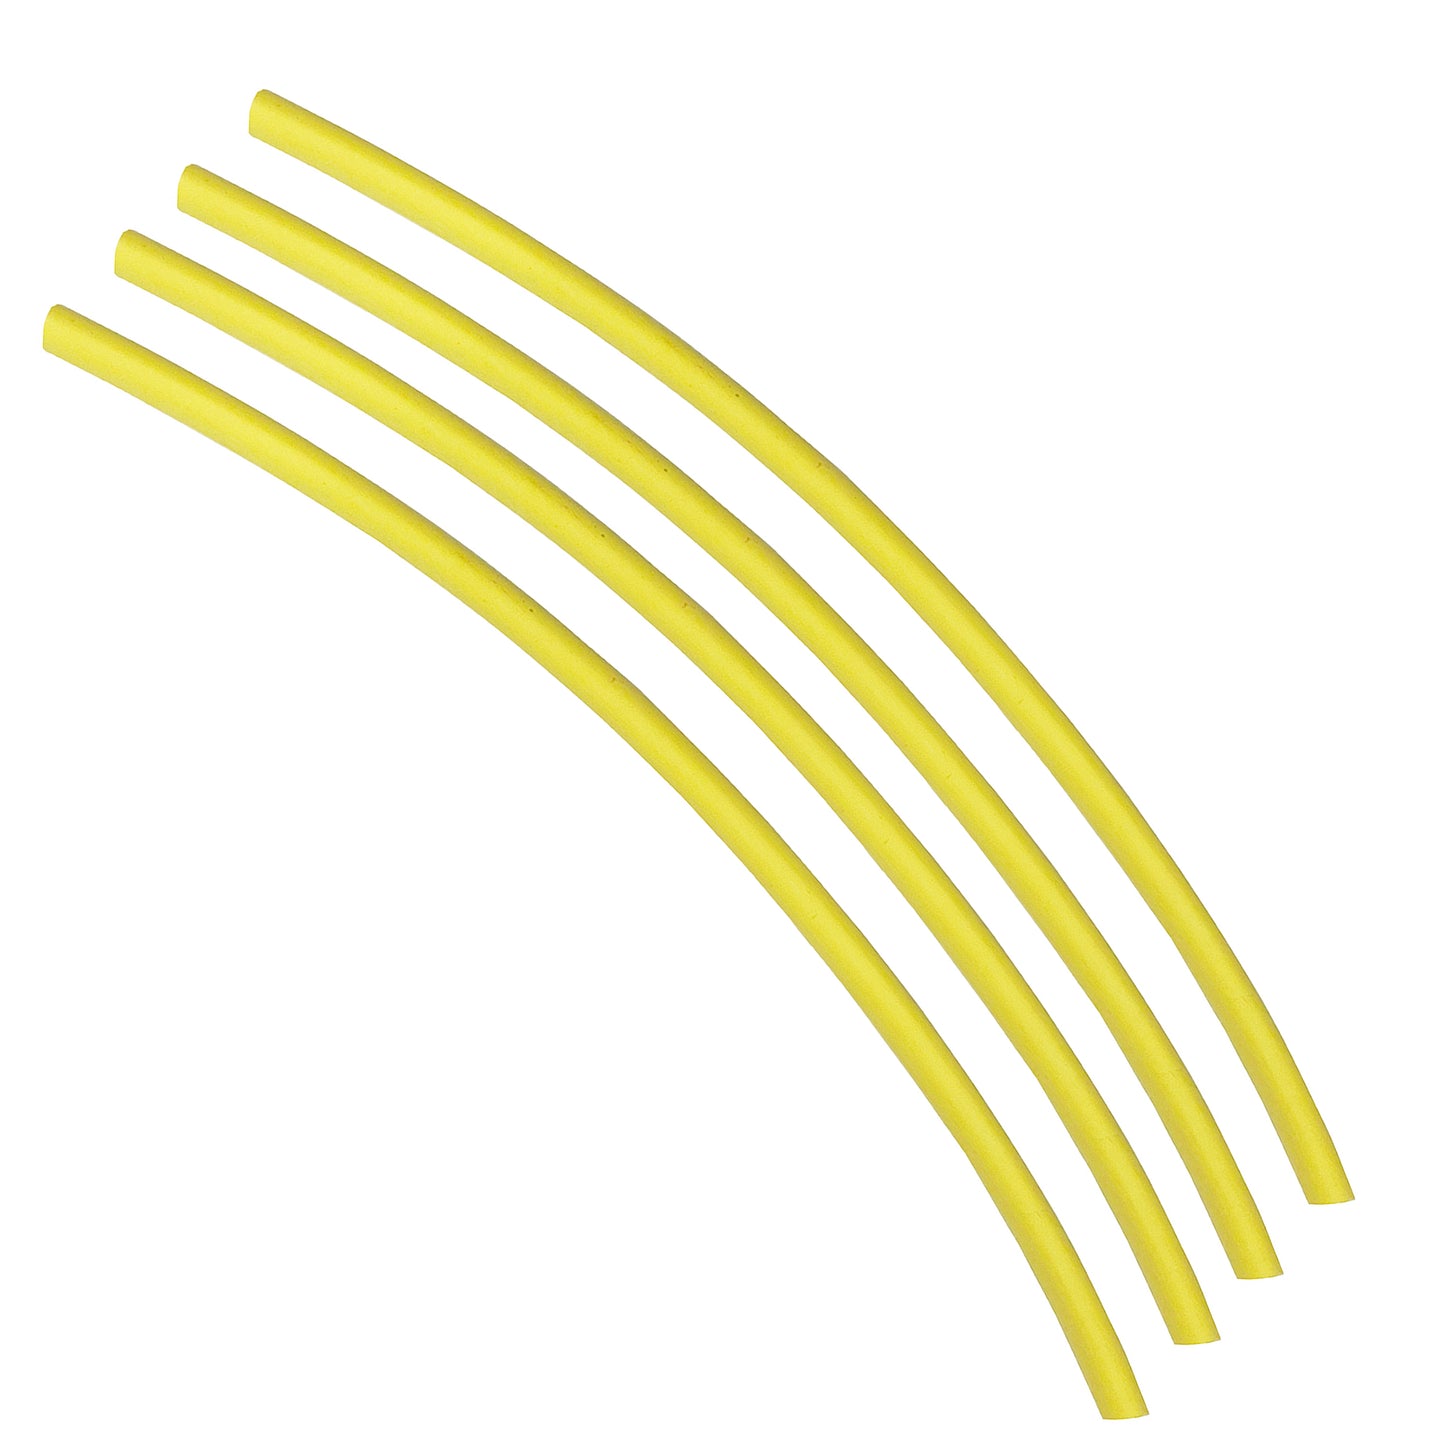 Flexible Thin Single Wall Non-Adhesive Heat Shrink Tubing 2:1 Yellow 1/8" ID - 100' Ft Spool